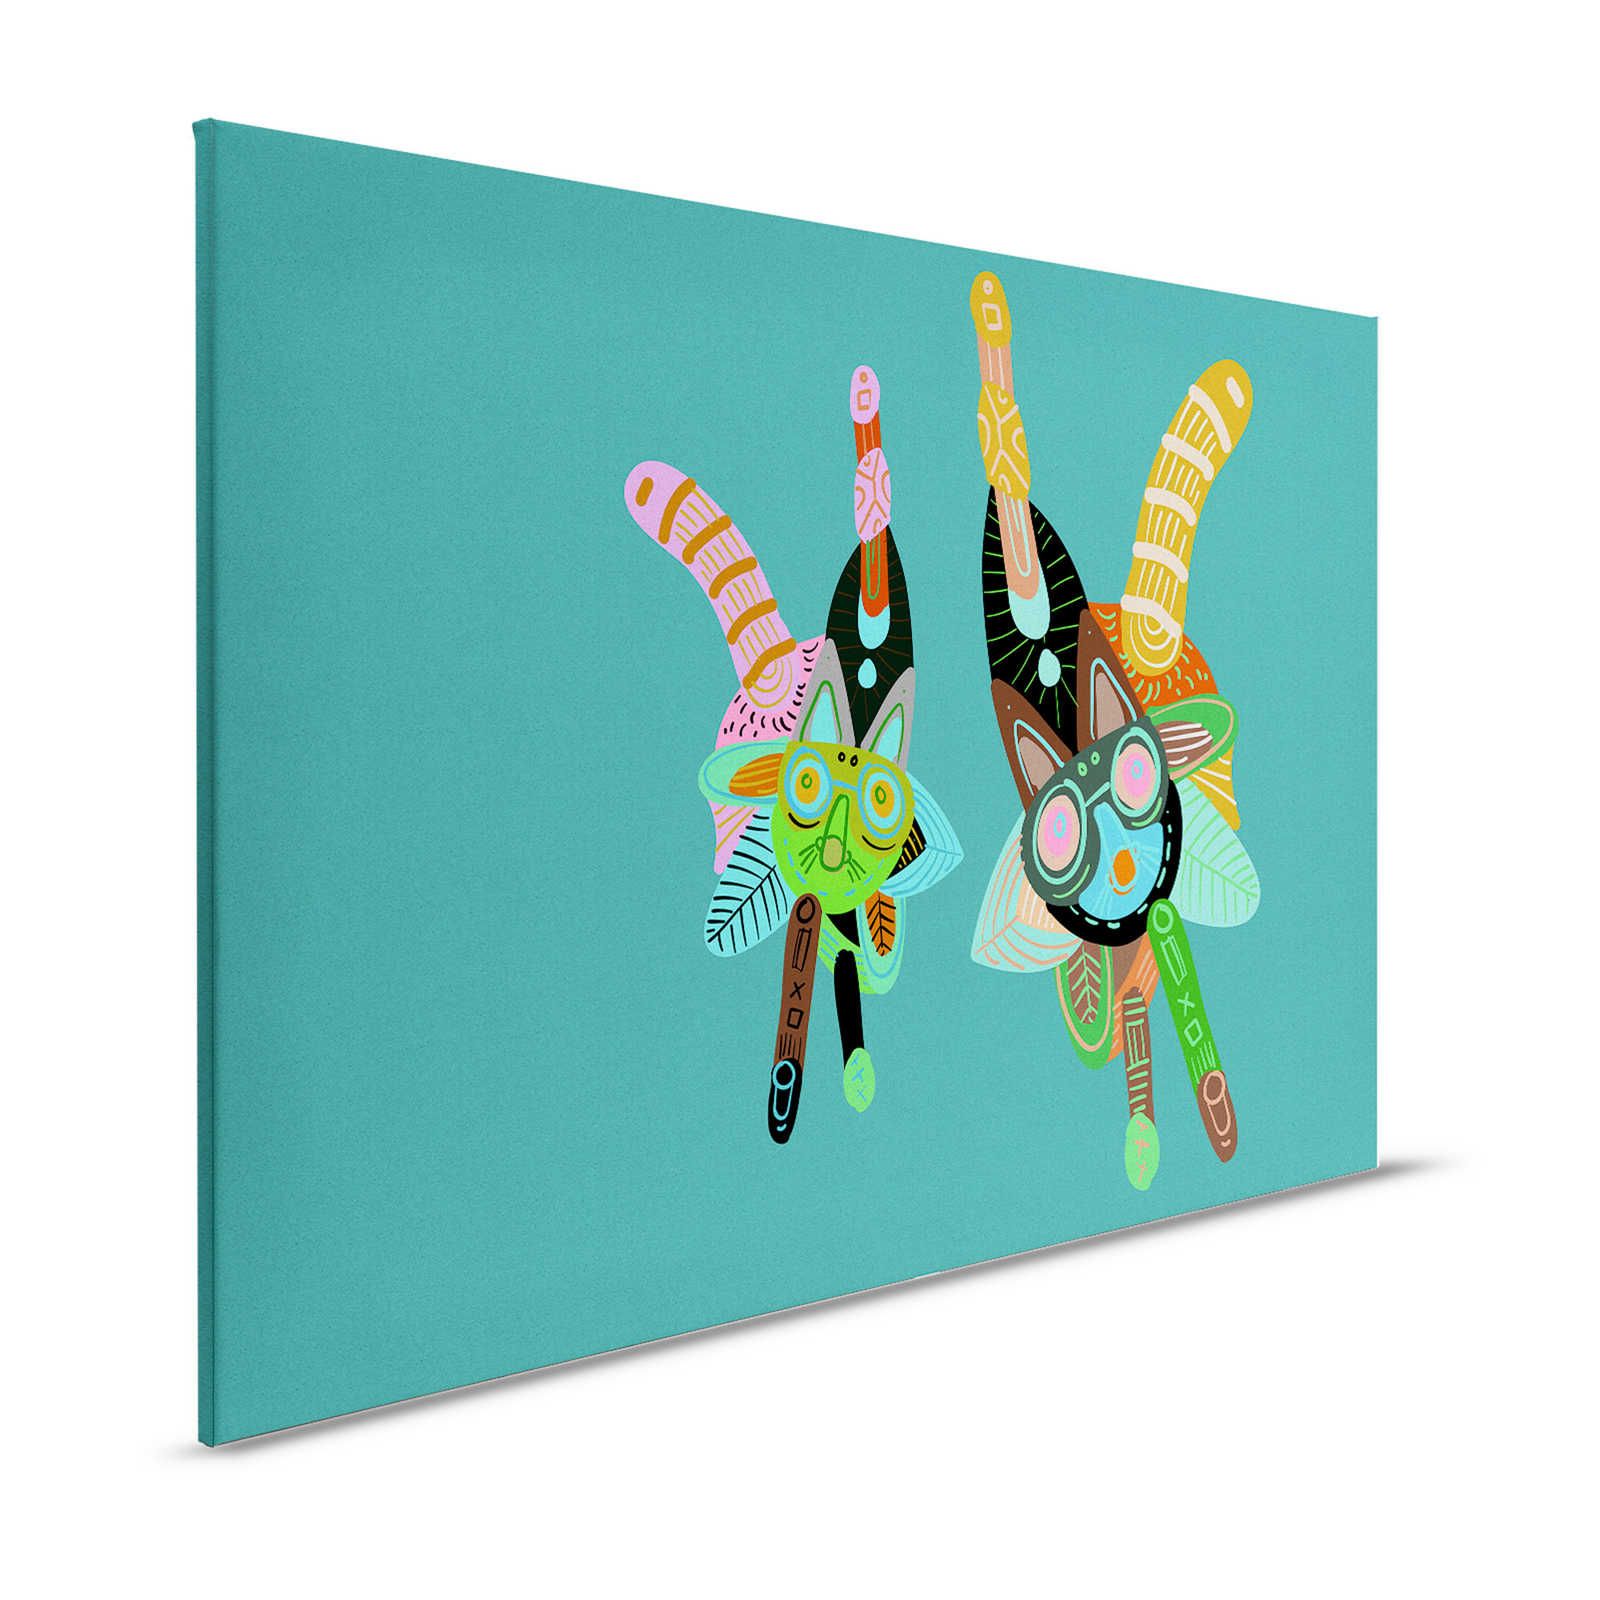 Looney Land 3 - Canvas painting children's room colourful comic design - 1.20 m x 0.80 m
